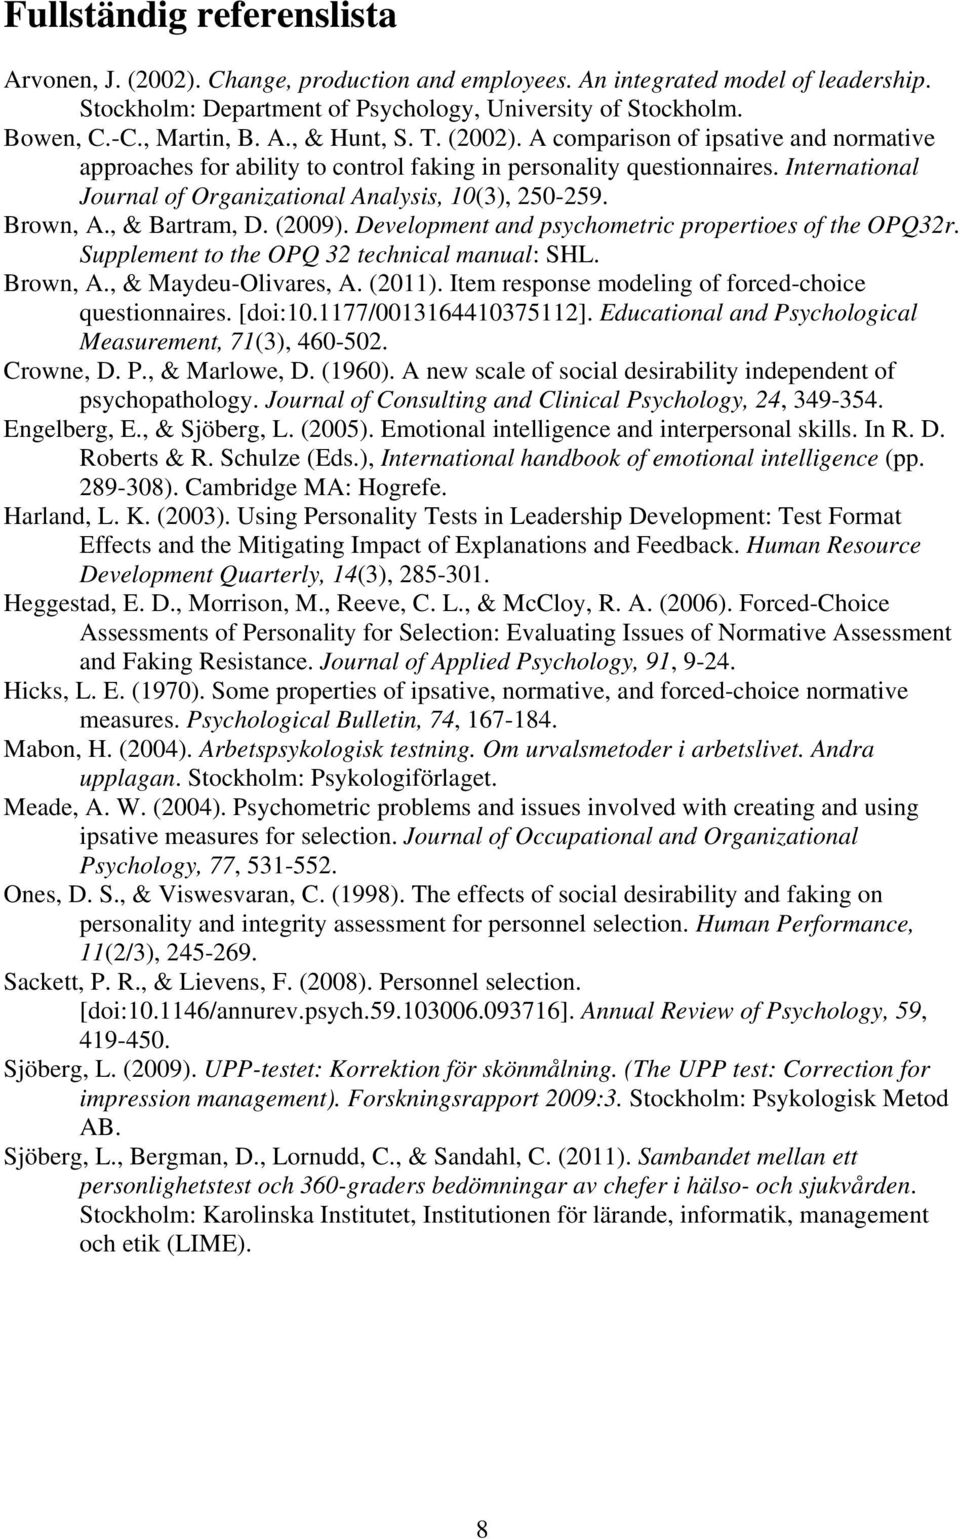 International Journal of Organizational Analysis, 10(3), 250-259. Brown, A., & Bartram, D. (2009). Development and psychometric propertioes of the OPQ32r.